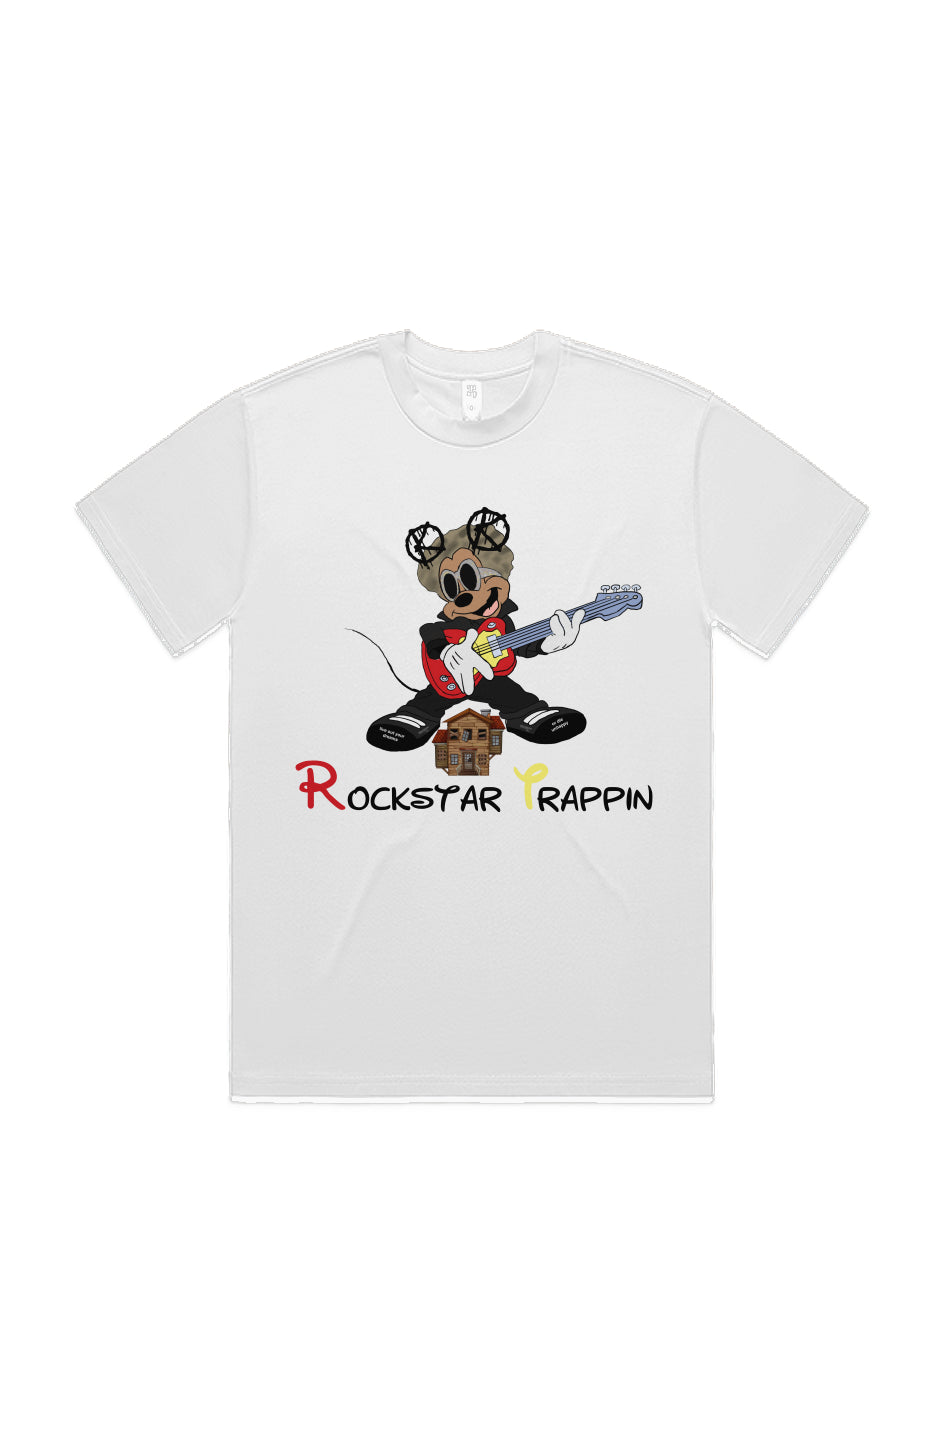 Rockstar Trappin (T-Shirt) White